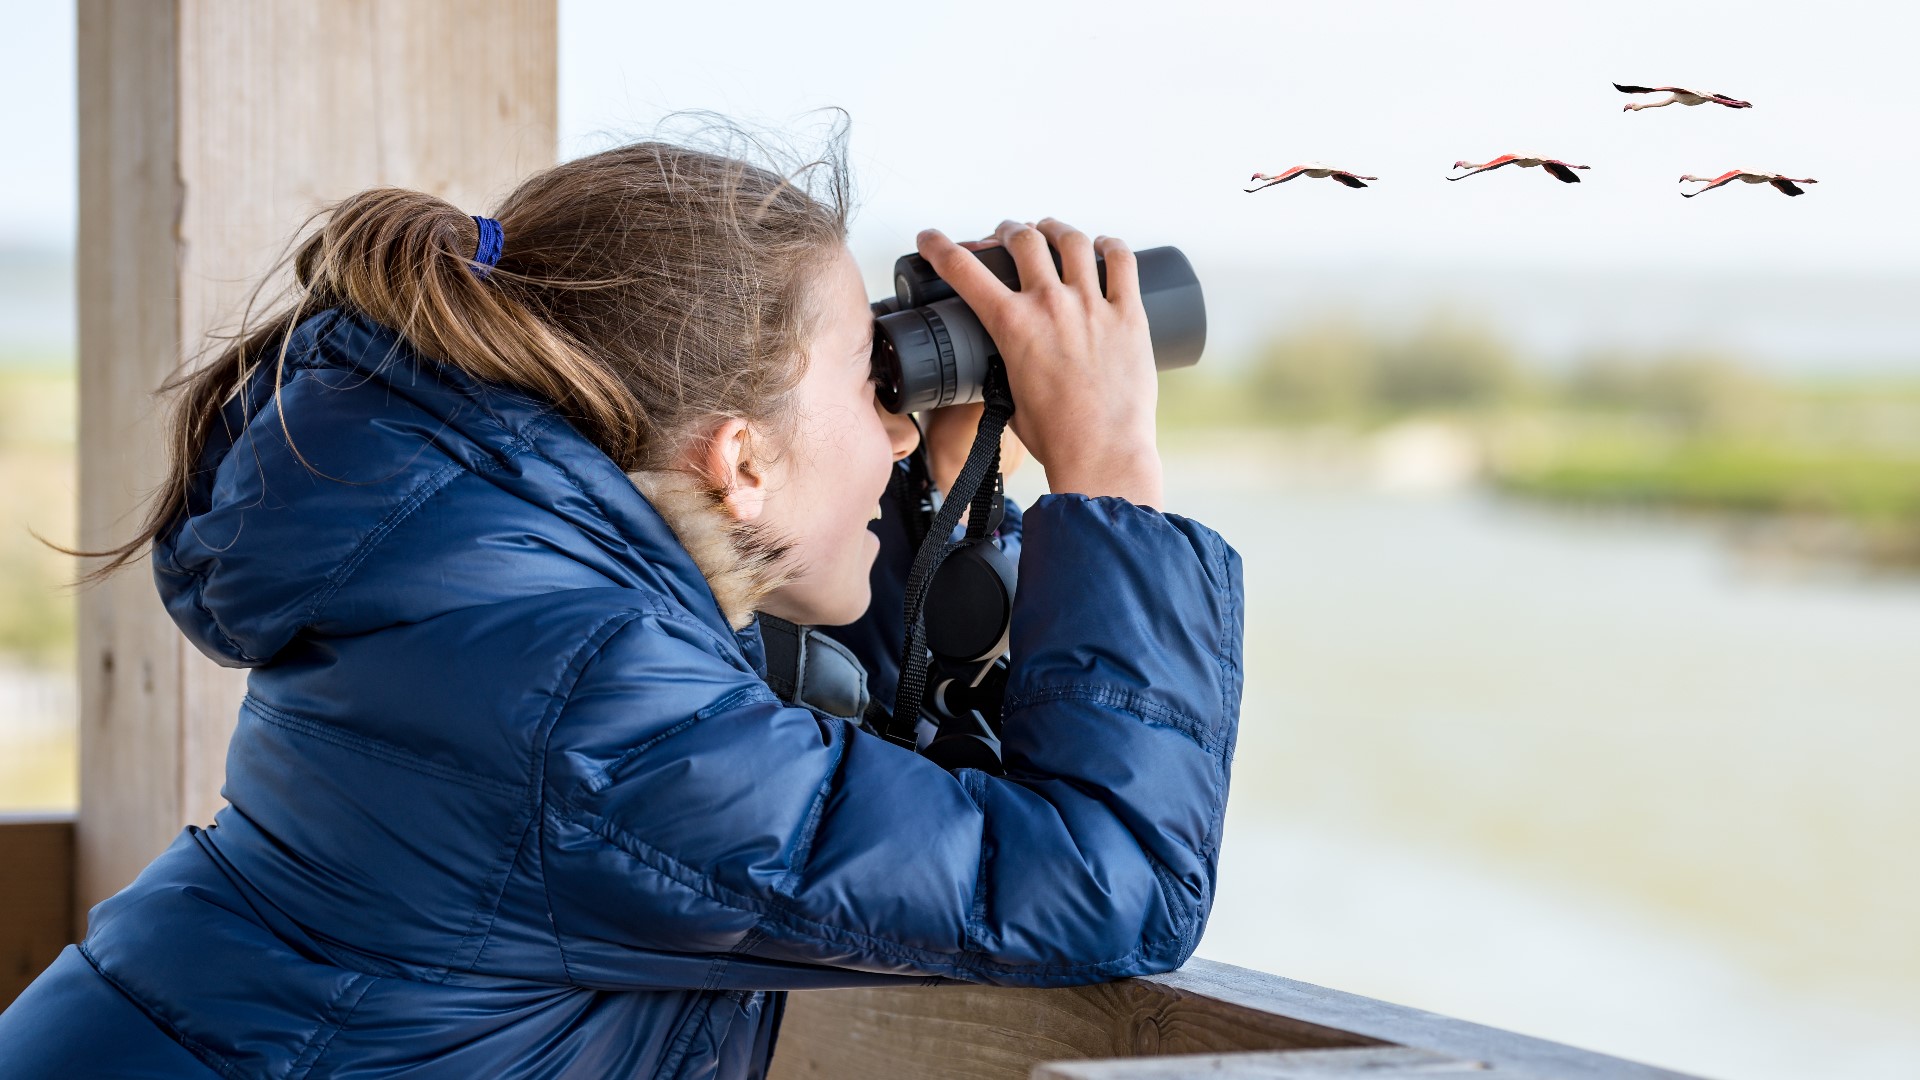 Blandford Nature Center has tips for teaching kids bird watching skills